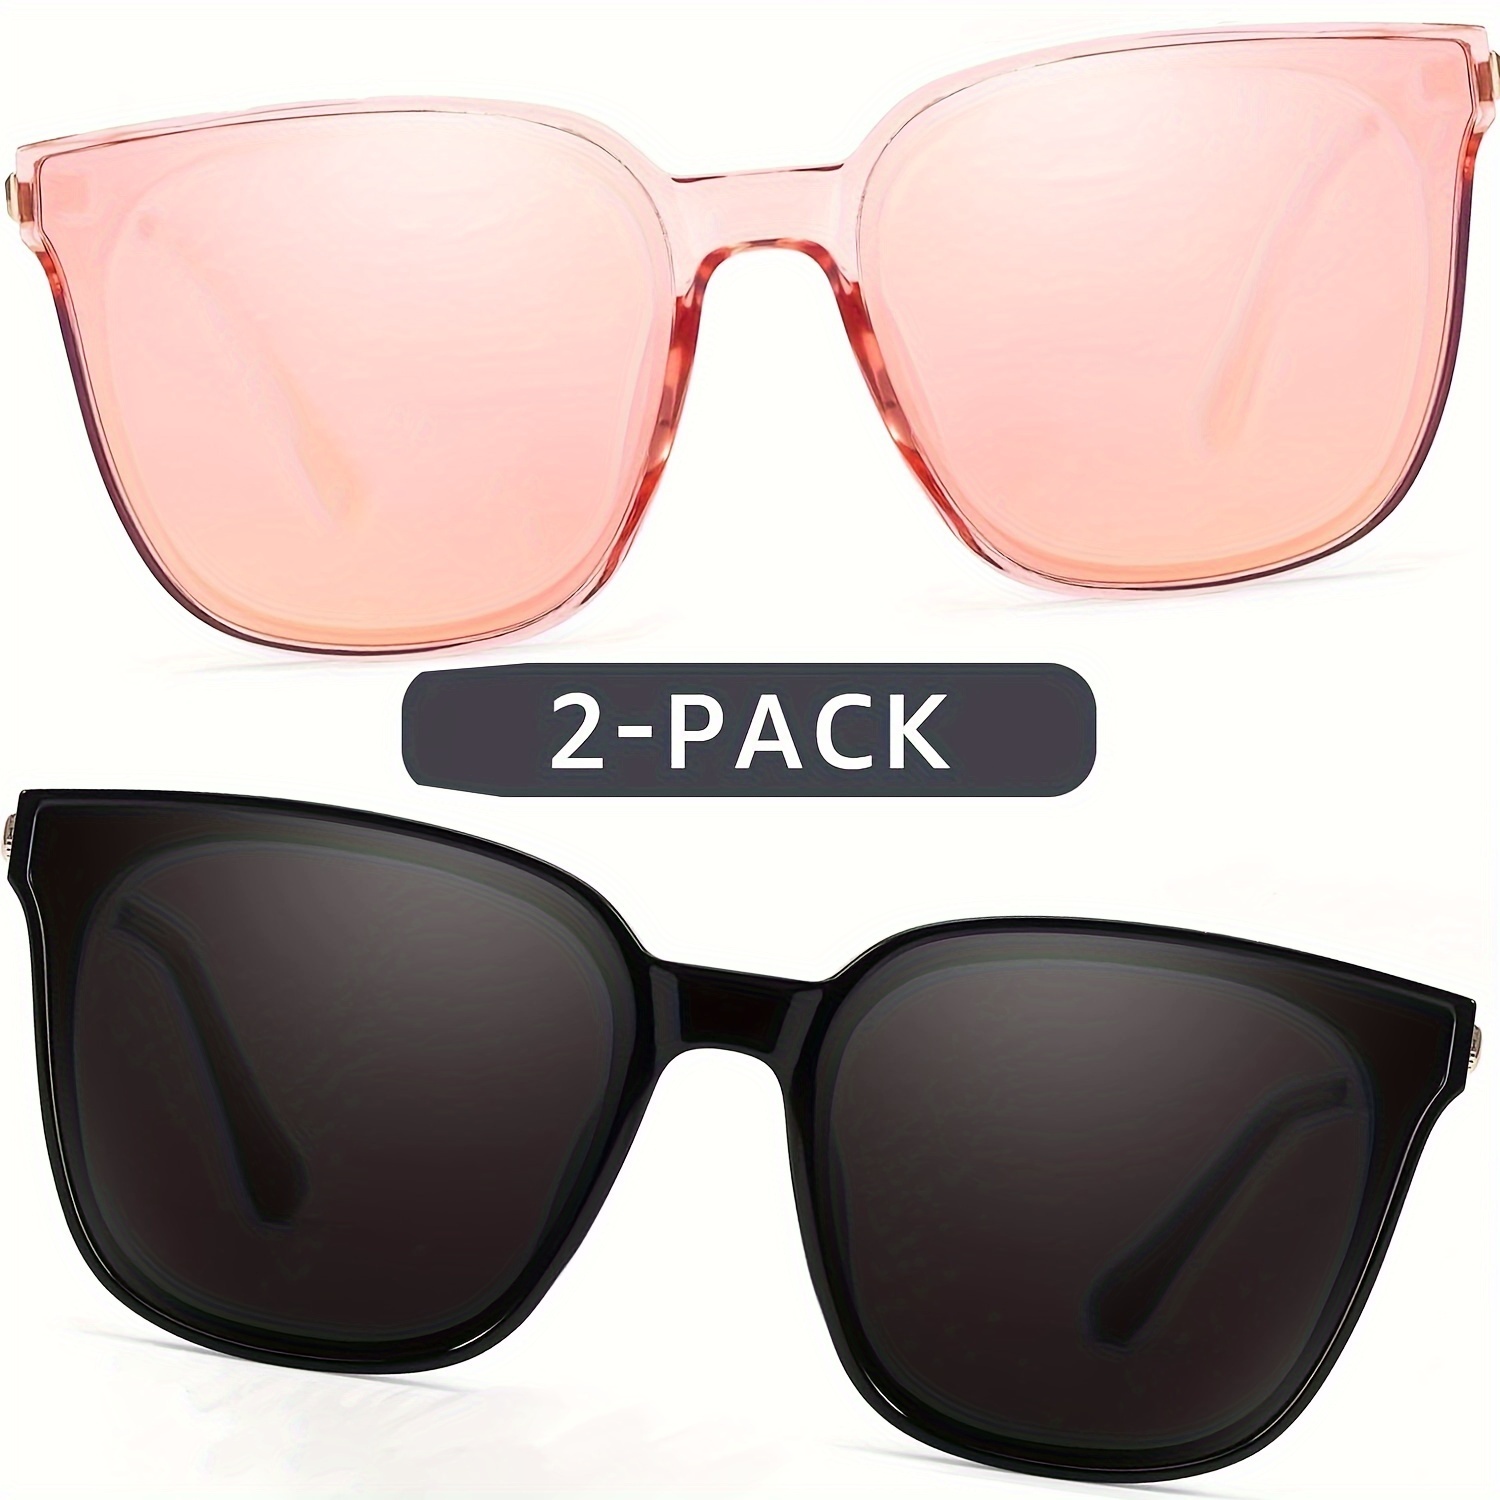 

2 Pcs Women's Polarized Glasses, Myiaur Fashionable Lightweight Frame, Mirrored Reflective Lenses, Designer Glasses Set